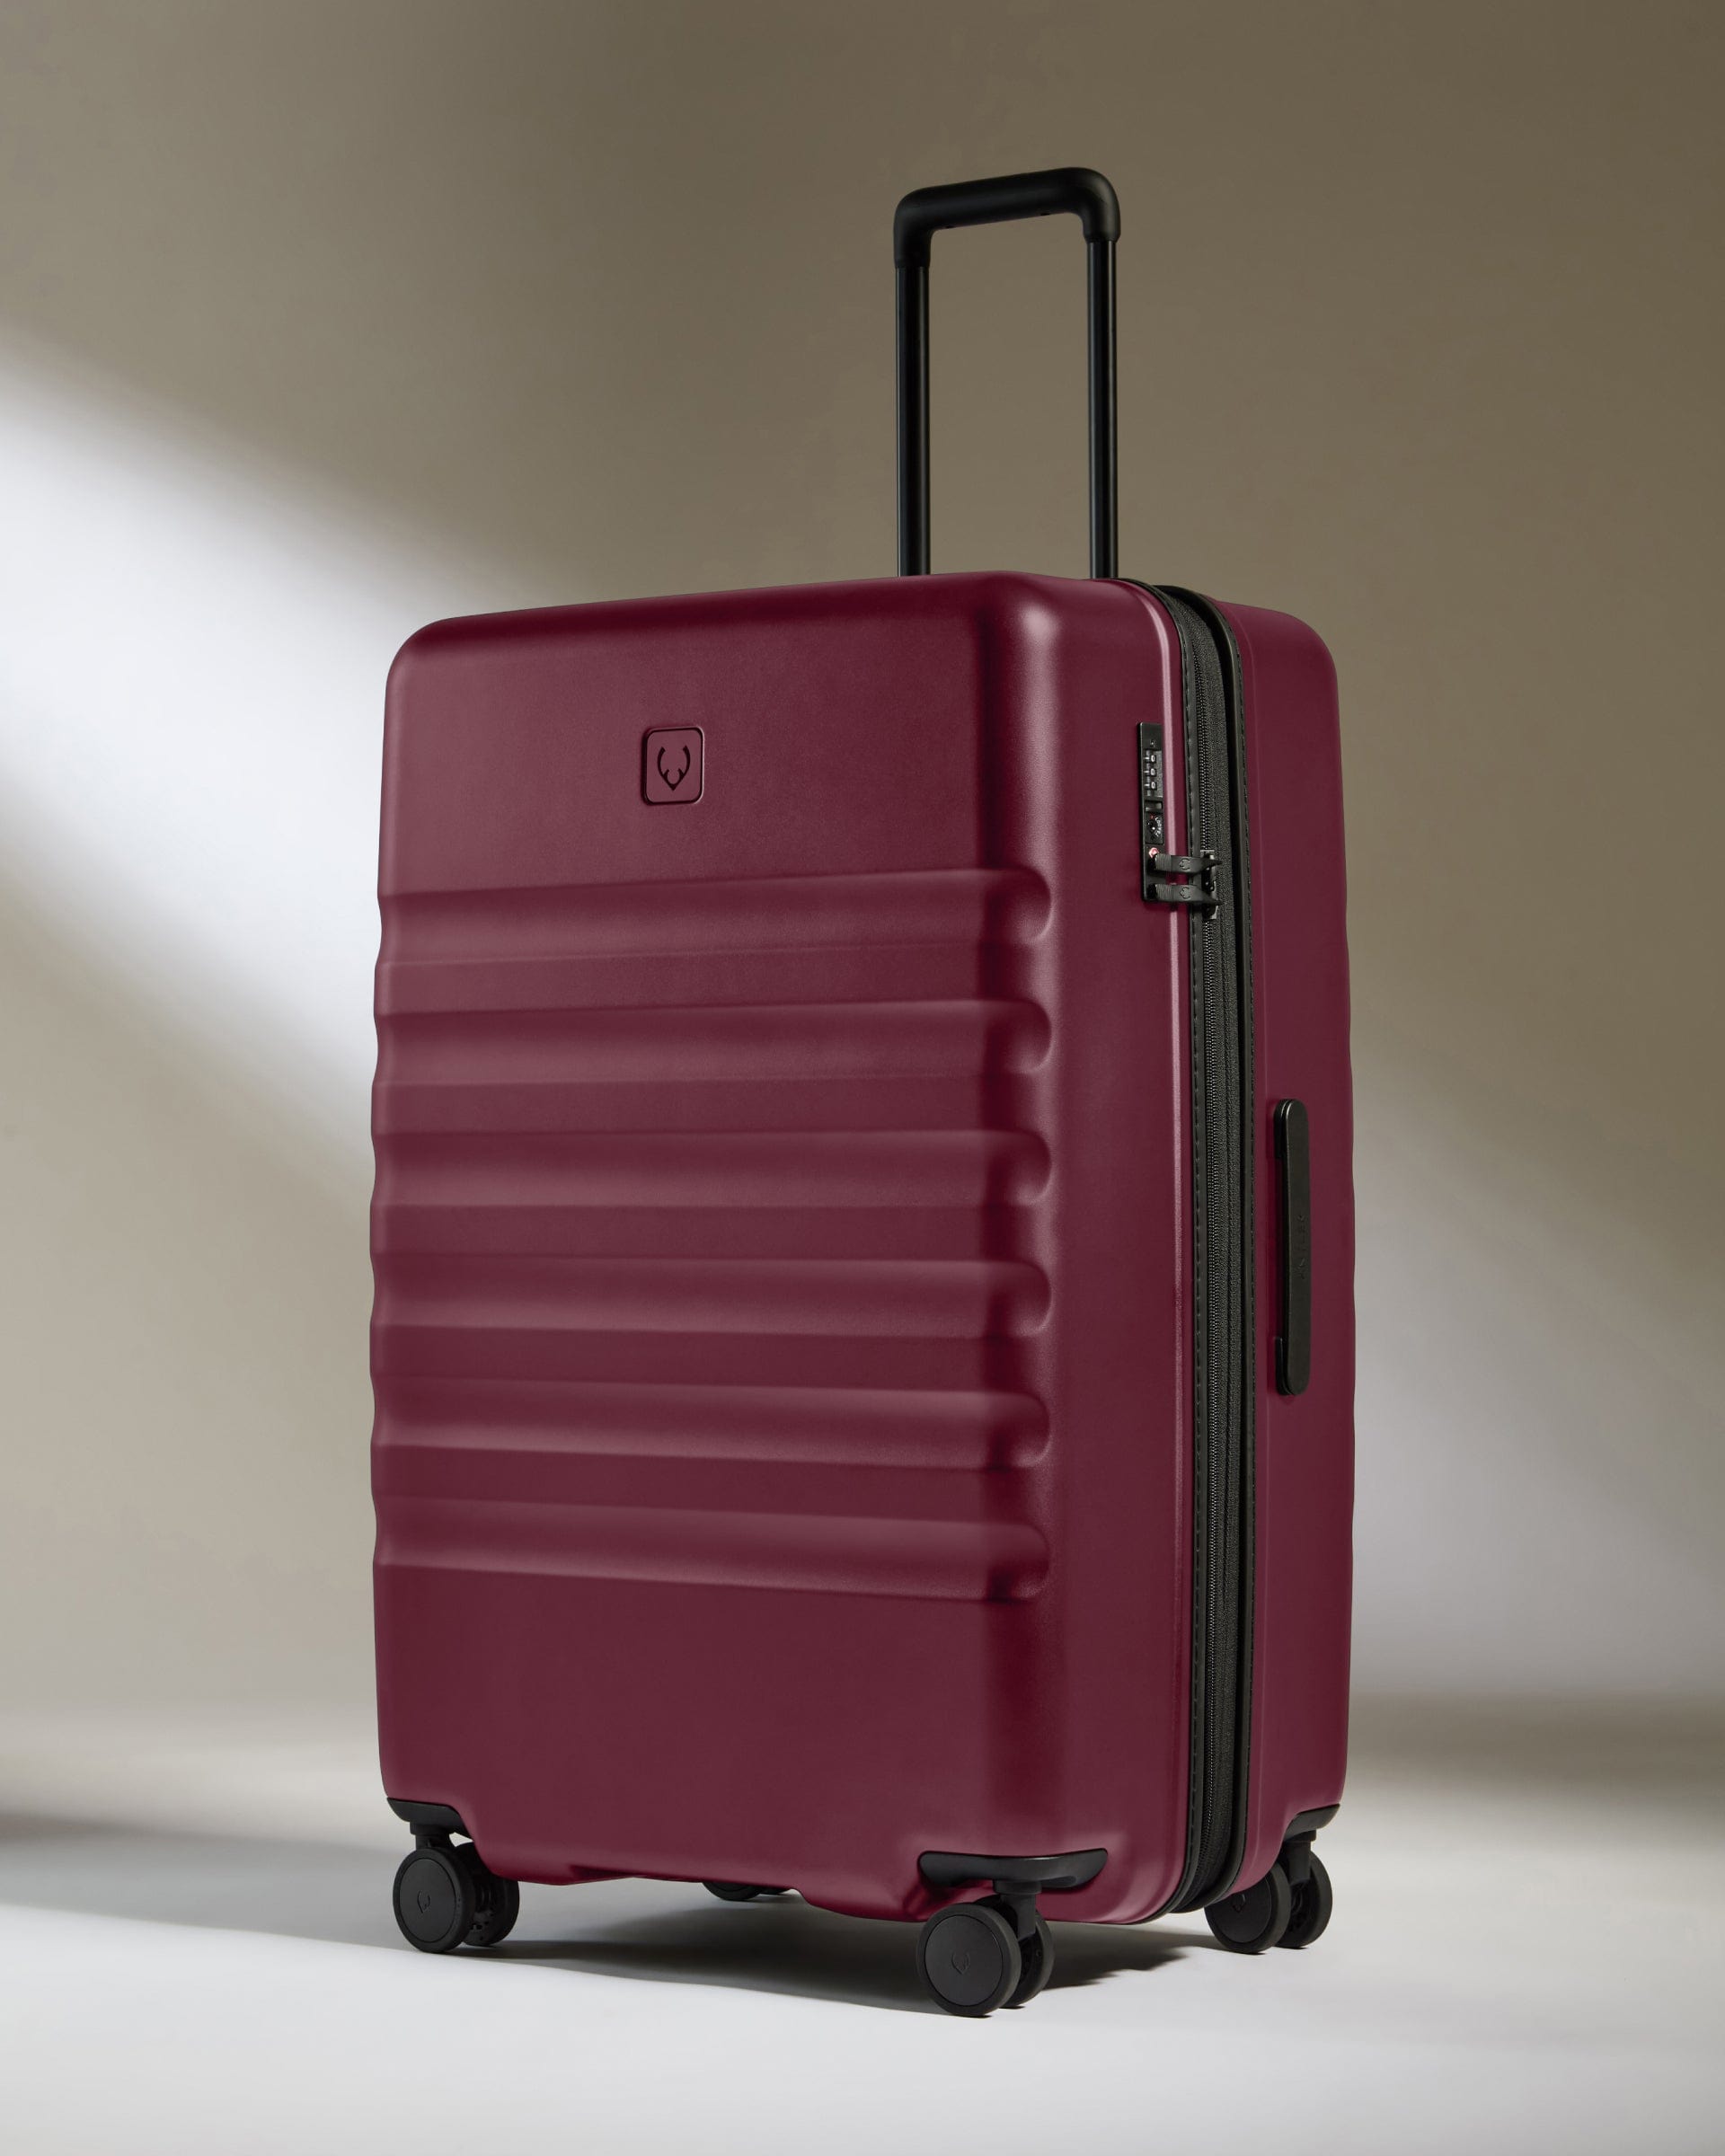 View Antler Icon Stripe Large Suitcase In Heather Purple Size 336cm x 78cm x 517cm information